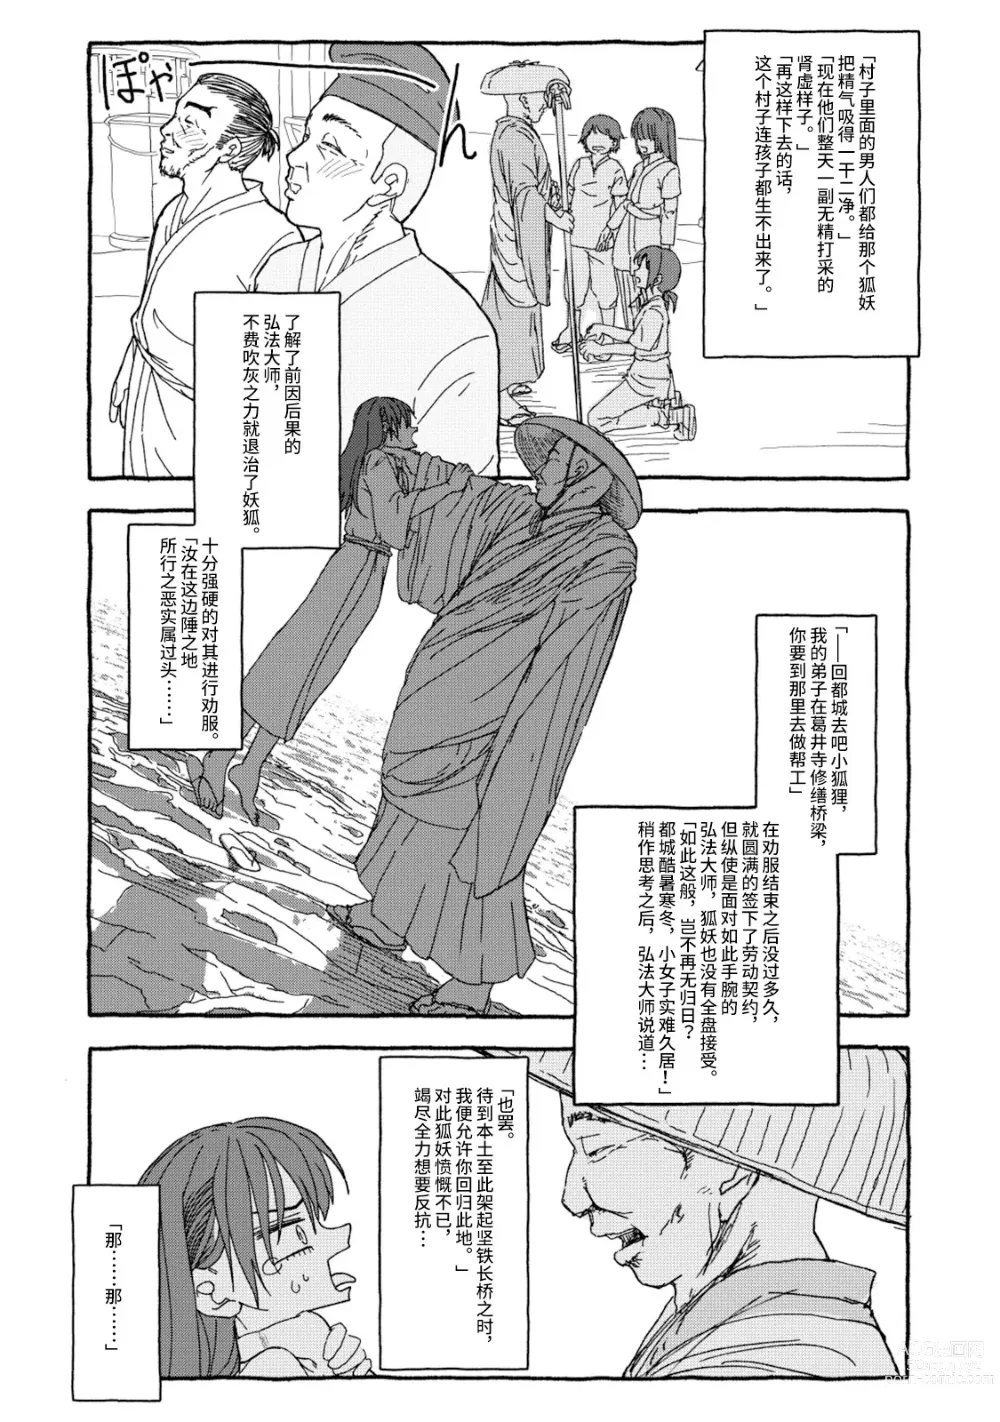 Page 8 of doujinshi 相遇四光年后合体 前篇